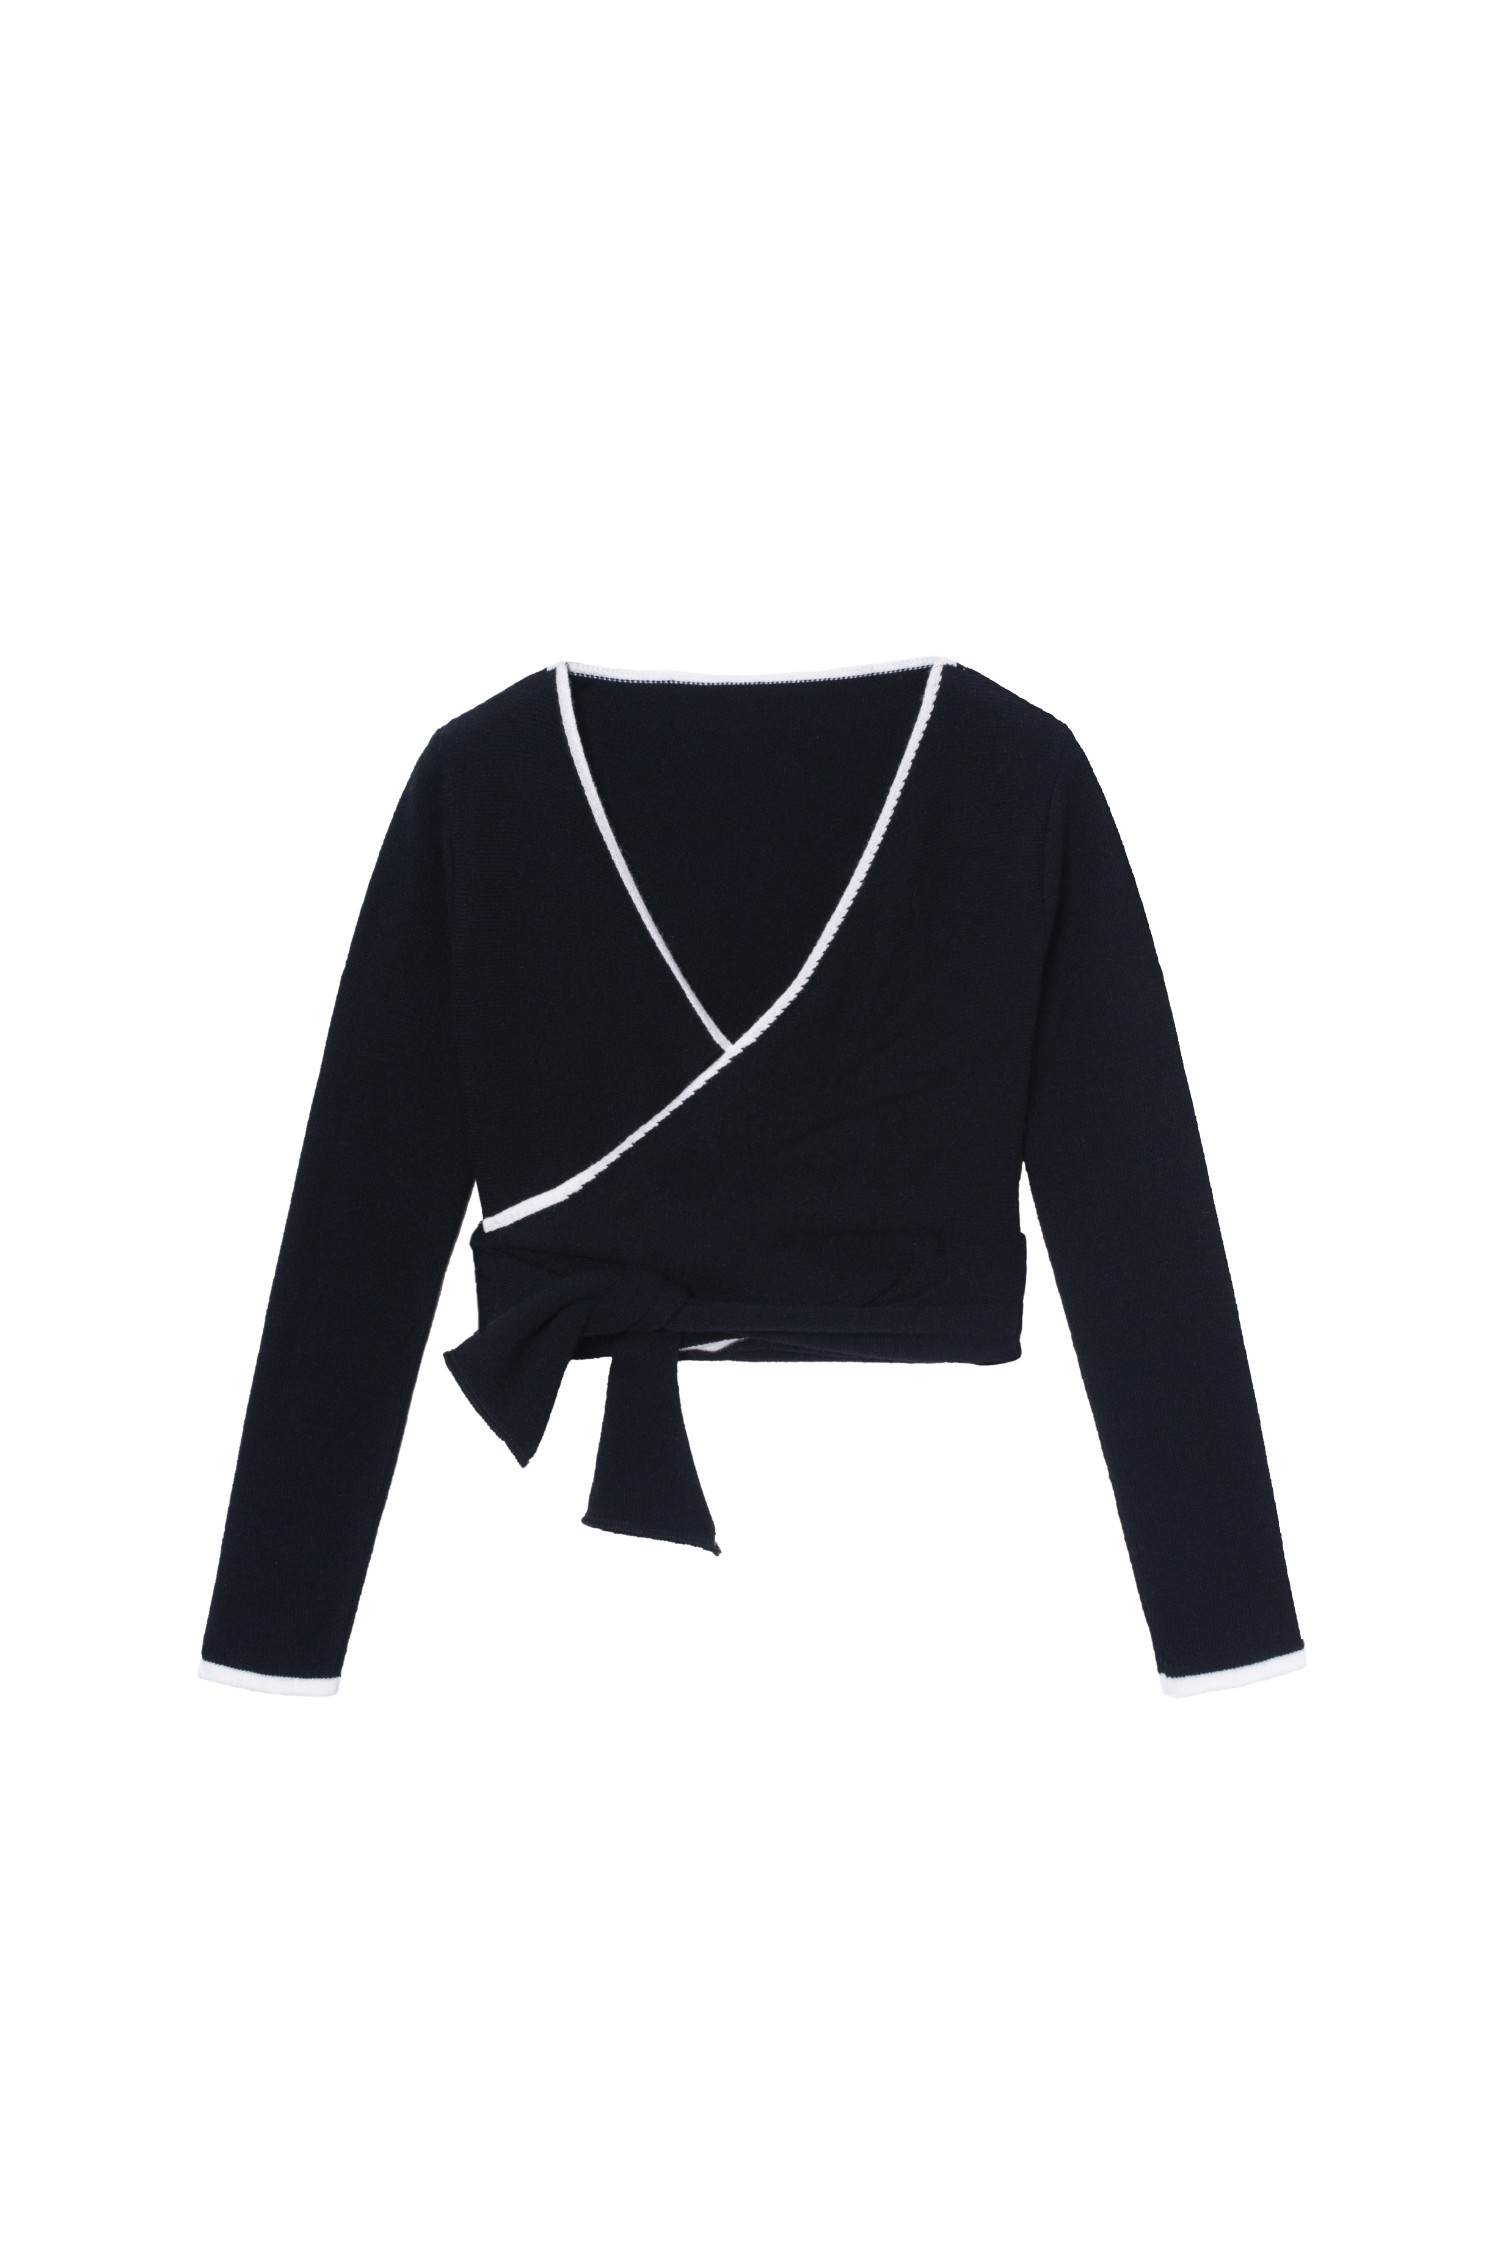 Musier Paris Black Sweater